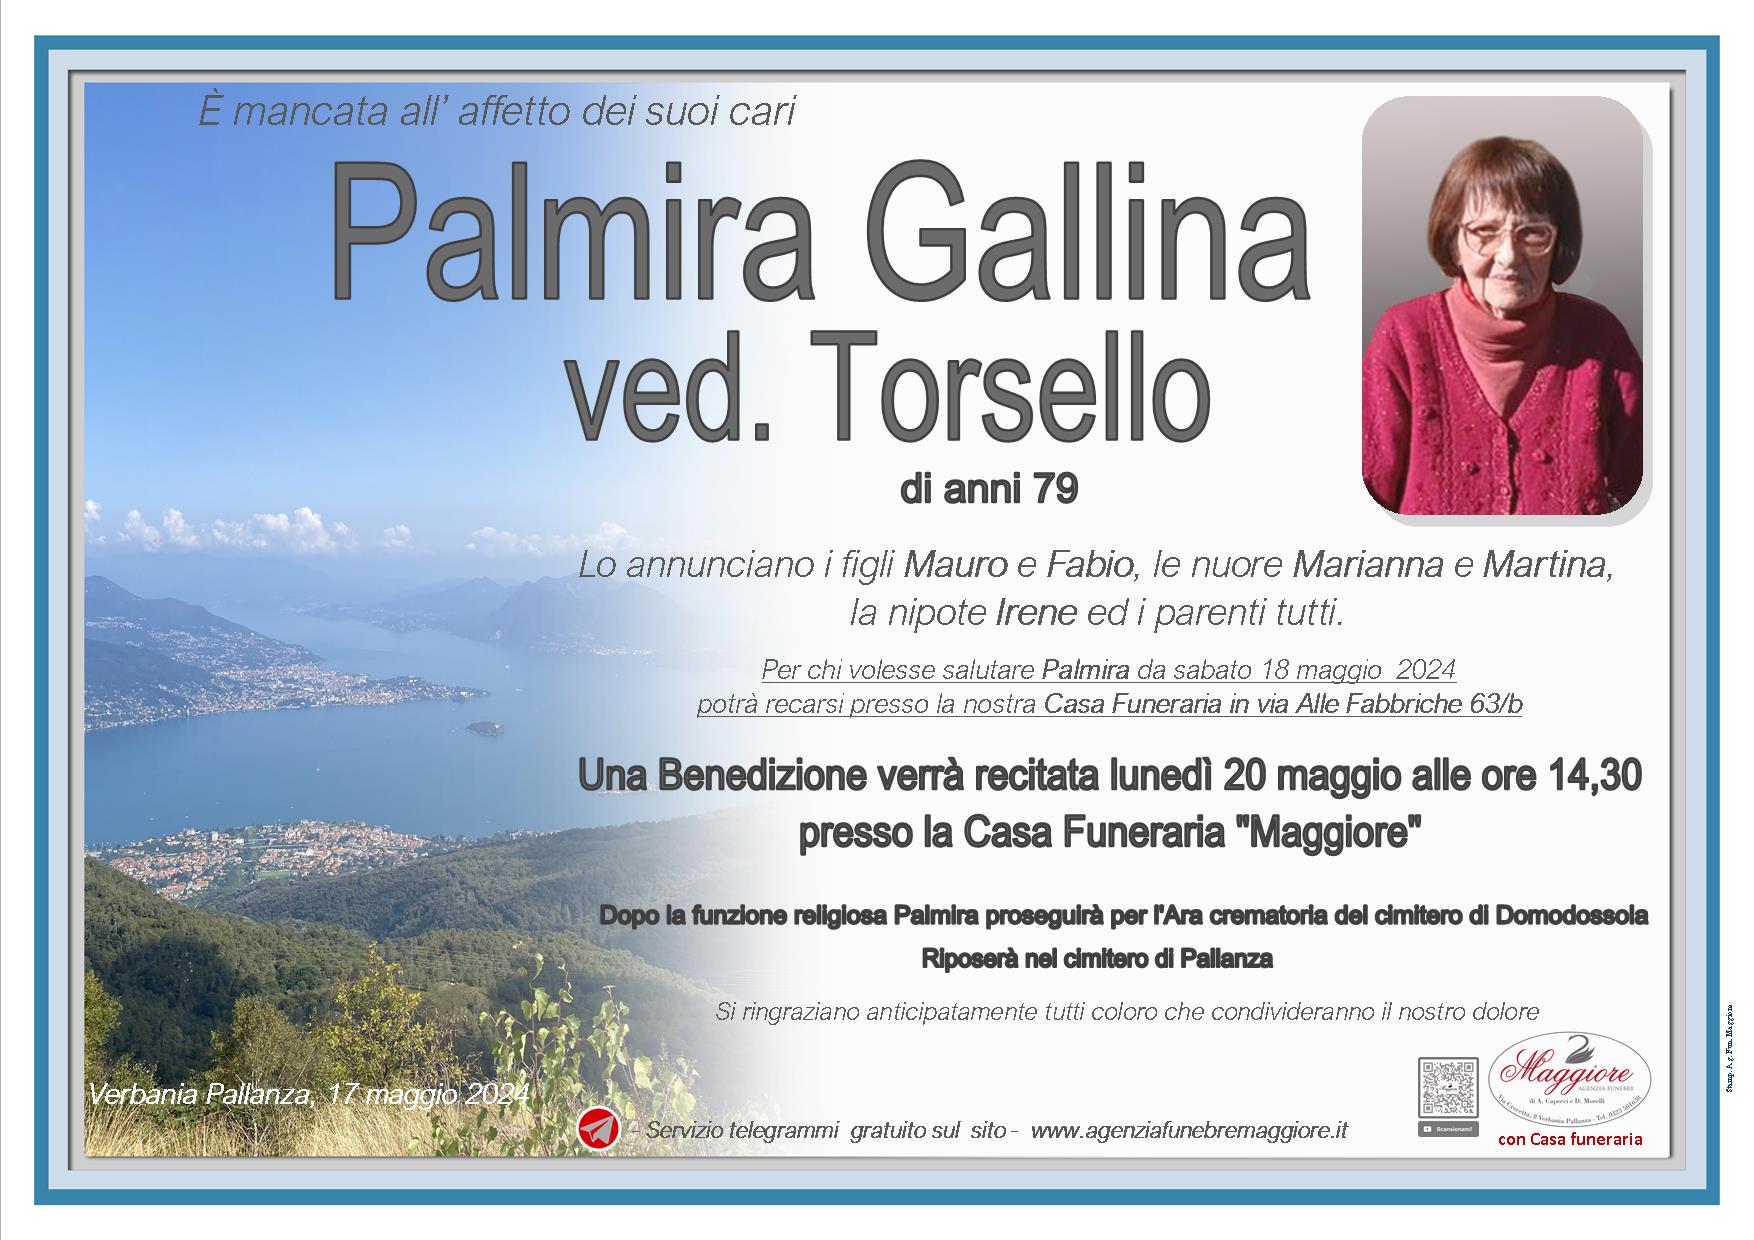 Palmira Gallina ved. Torsello